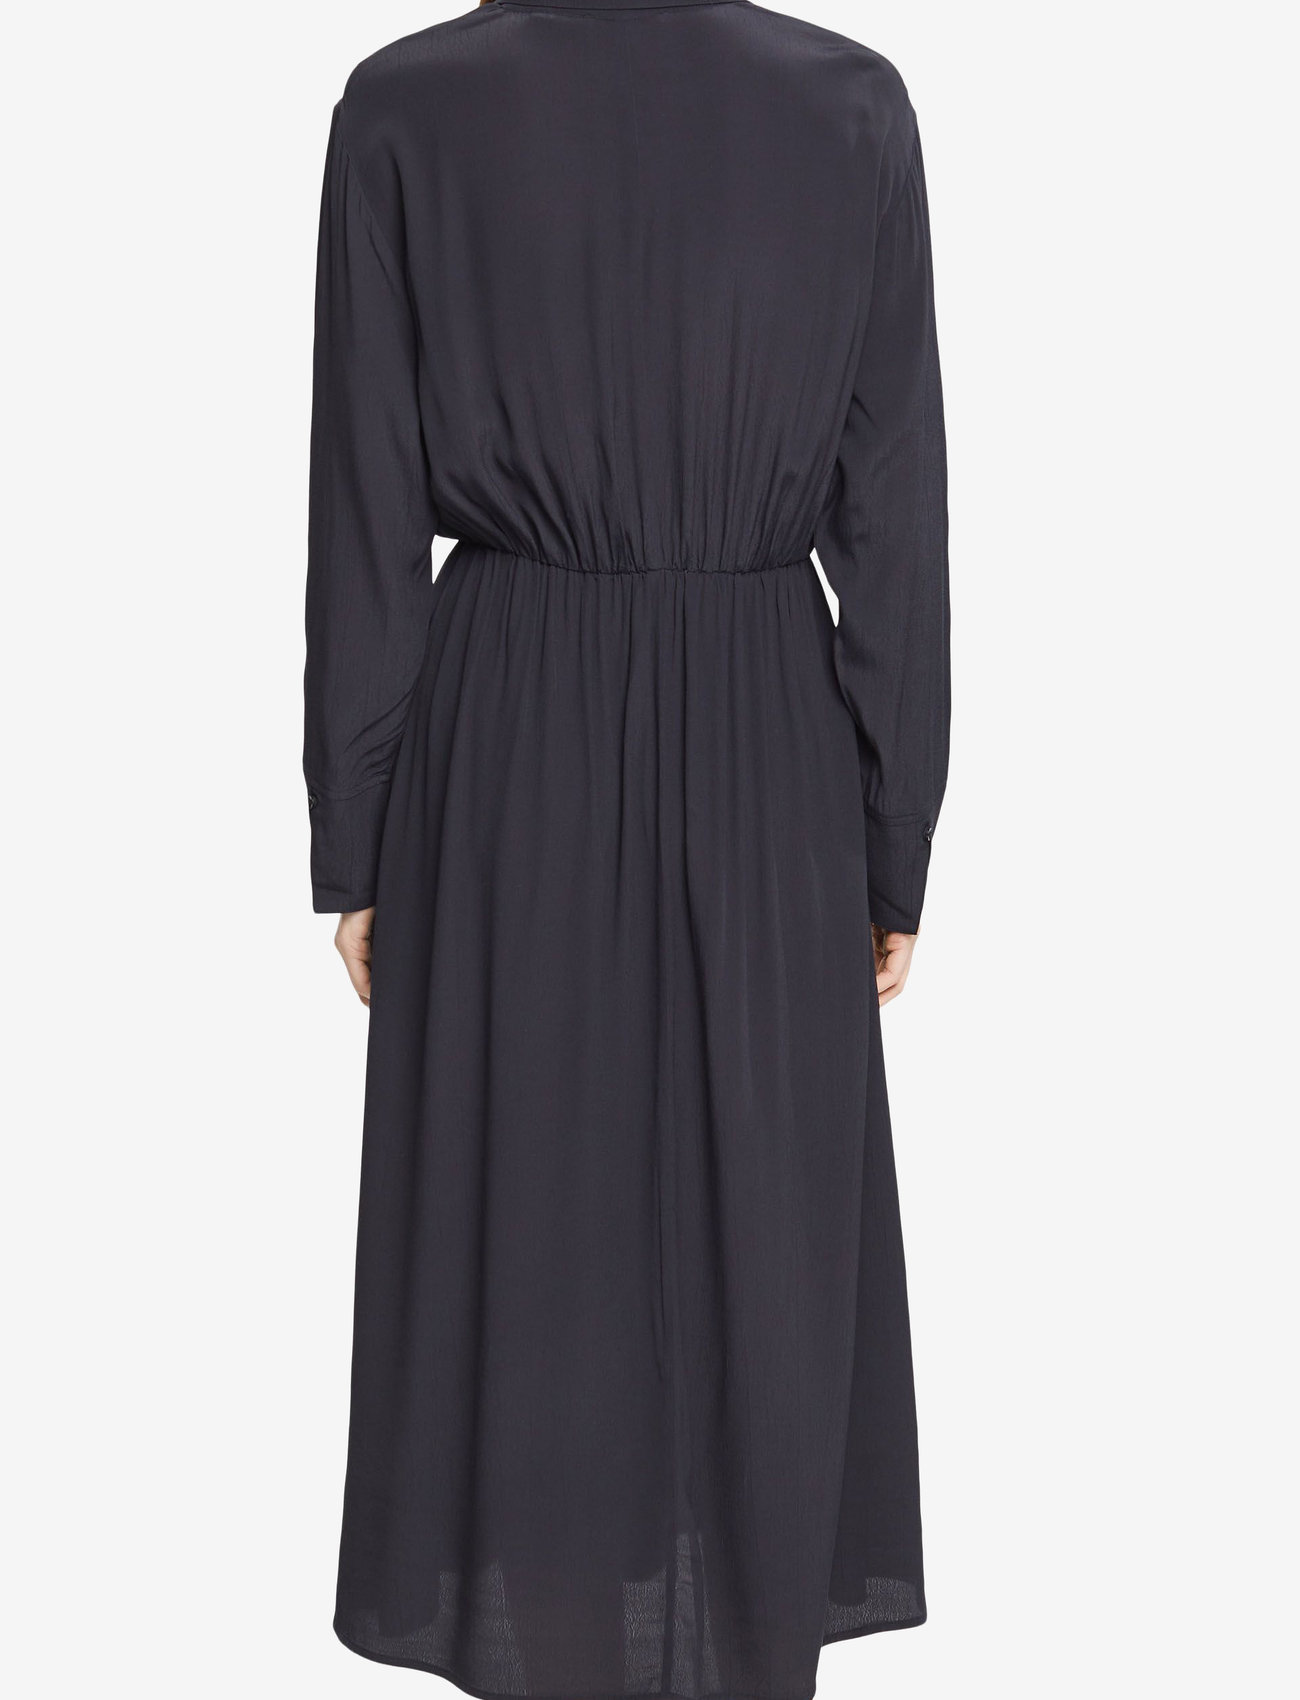 Esprit Casual - Midi dress with tie detail - kreklkleitas - black - 1